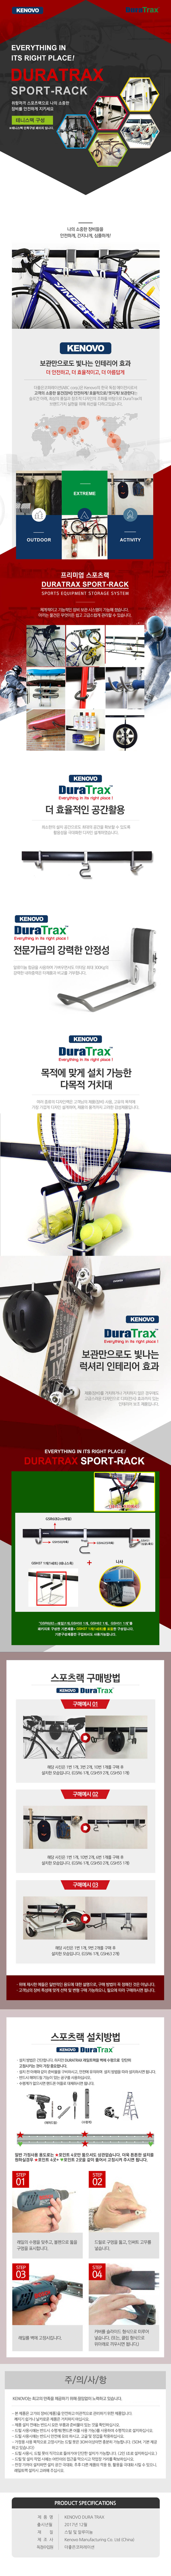 Duratrax_tennis.jpg